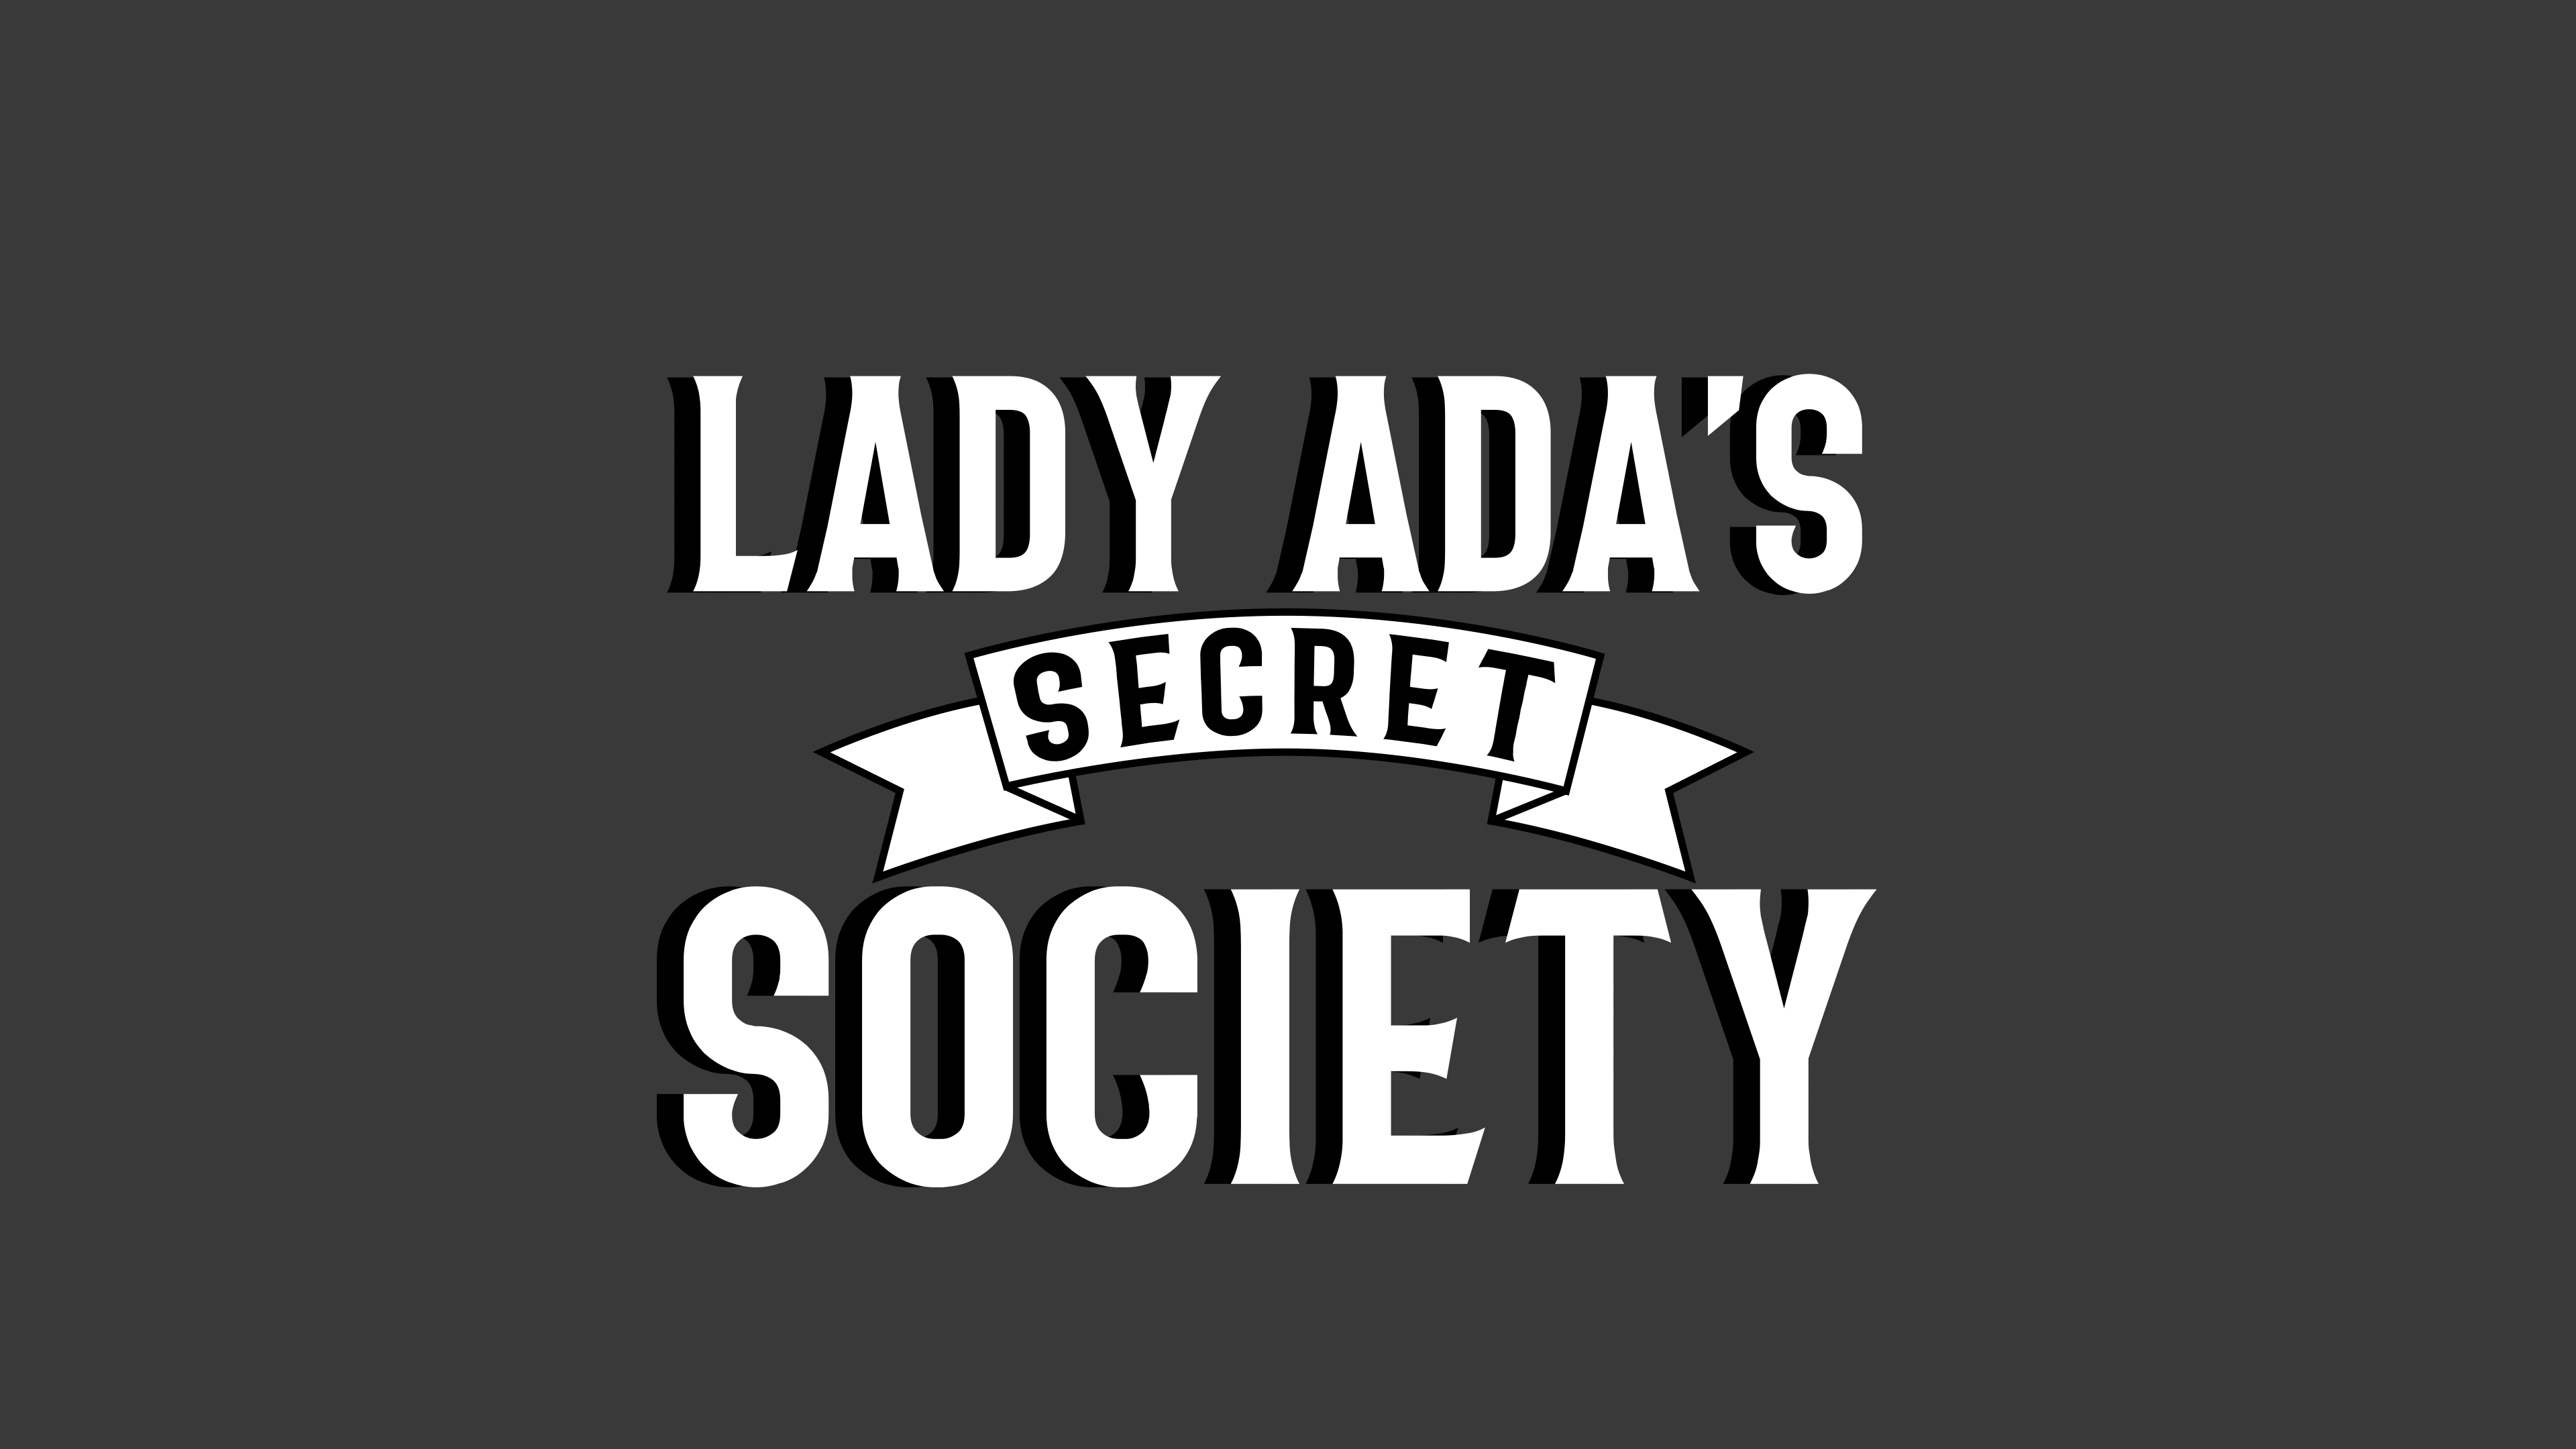 Lady Ada's Secret Society